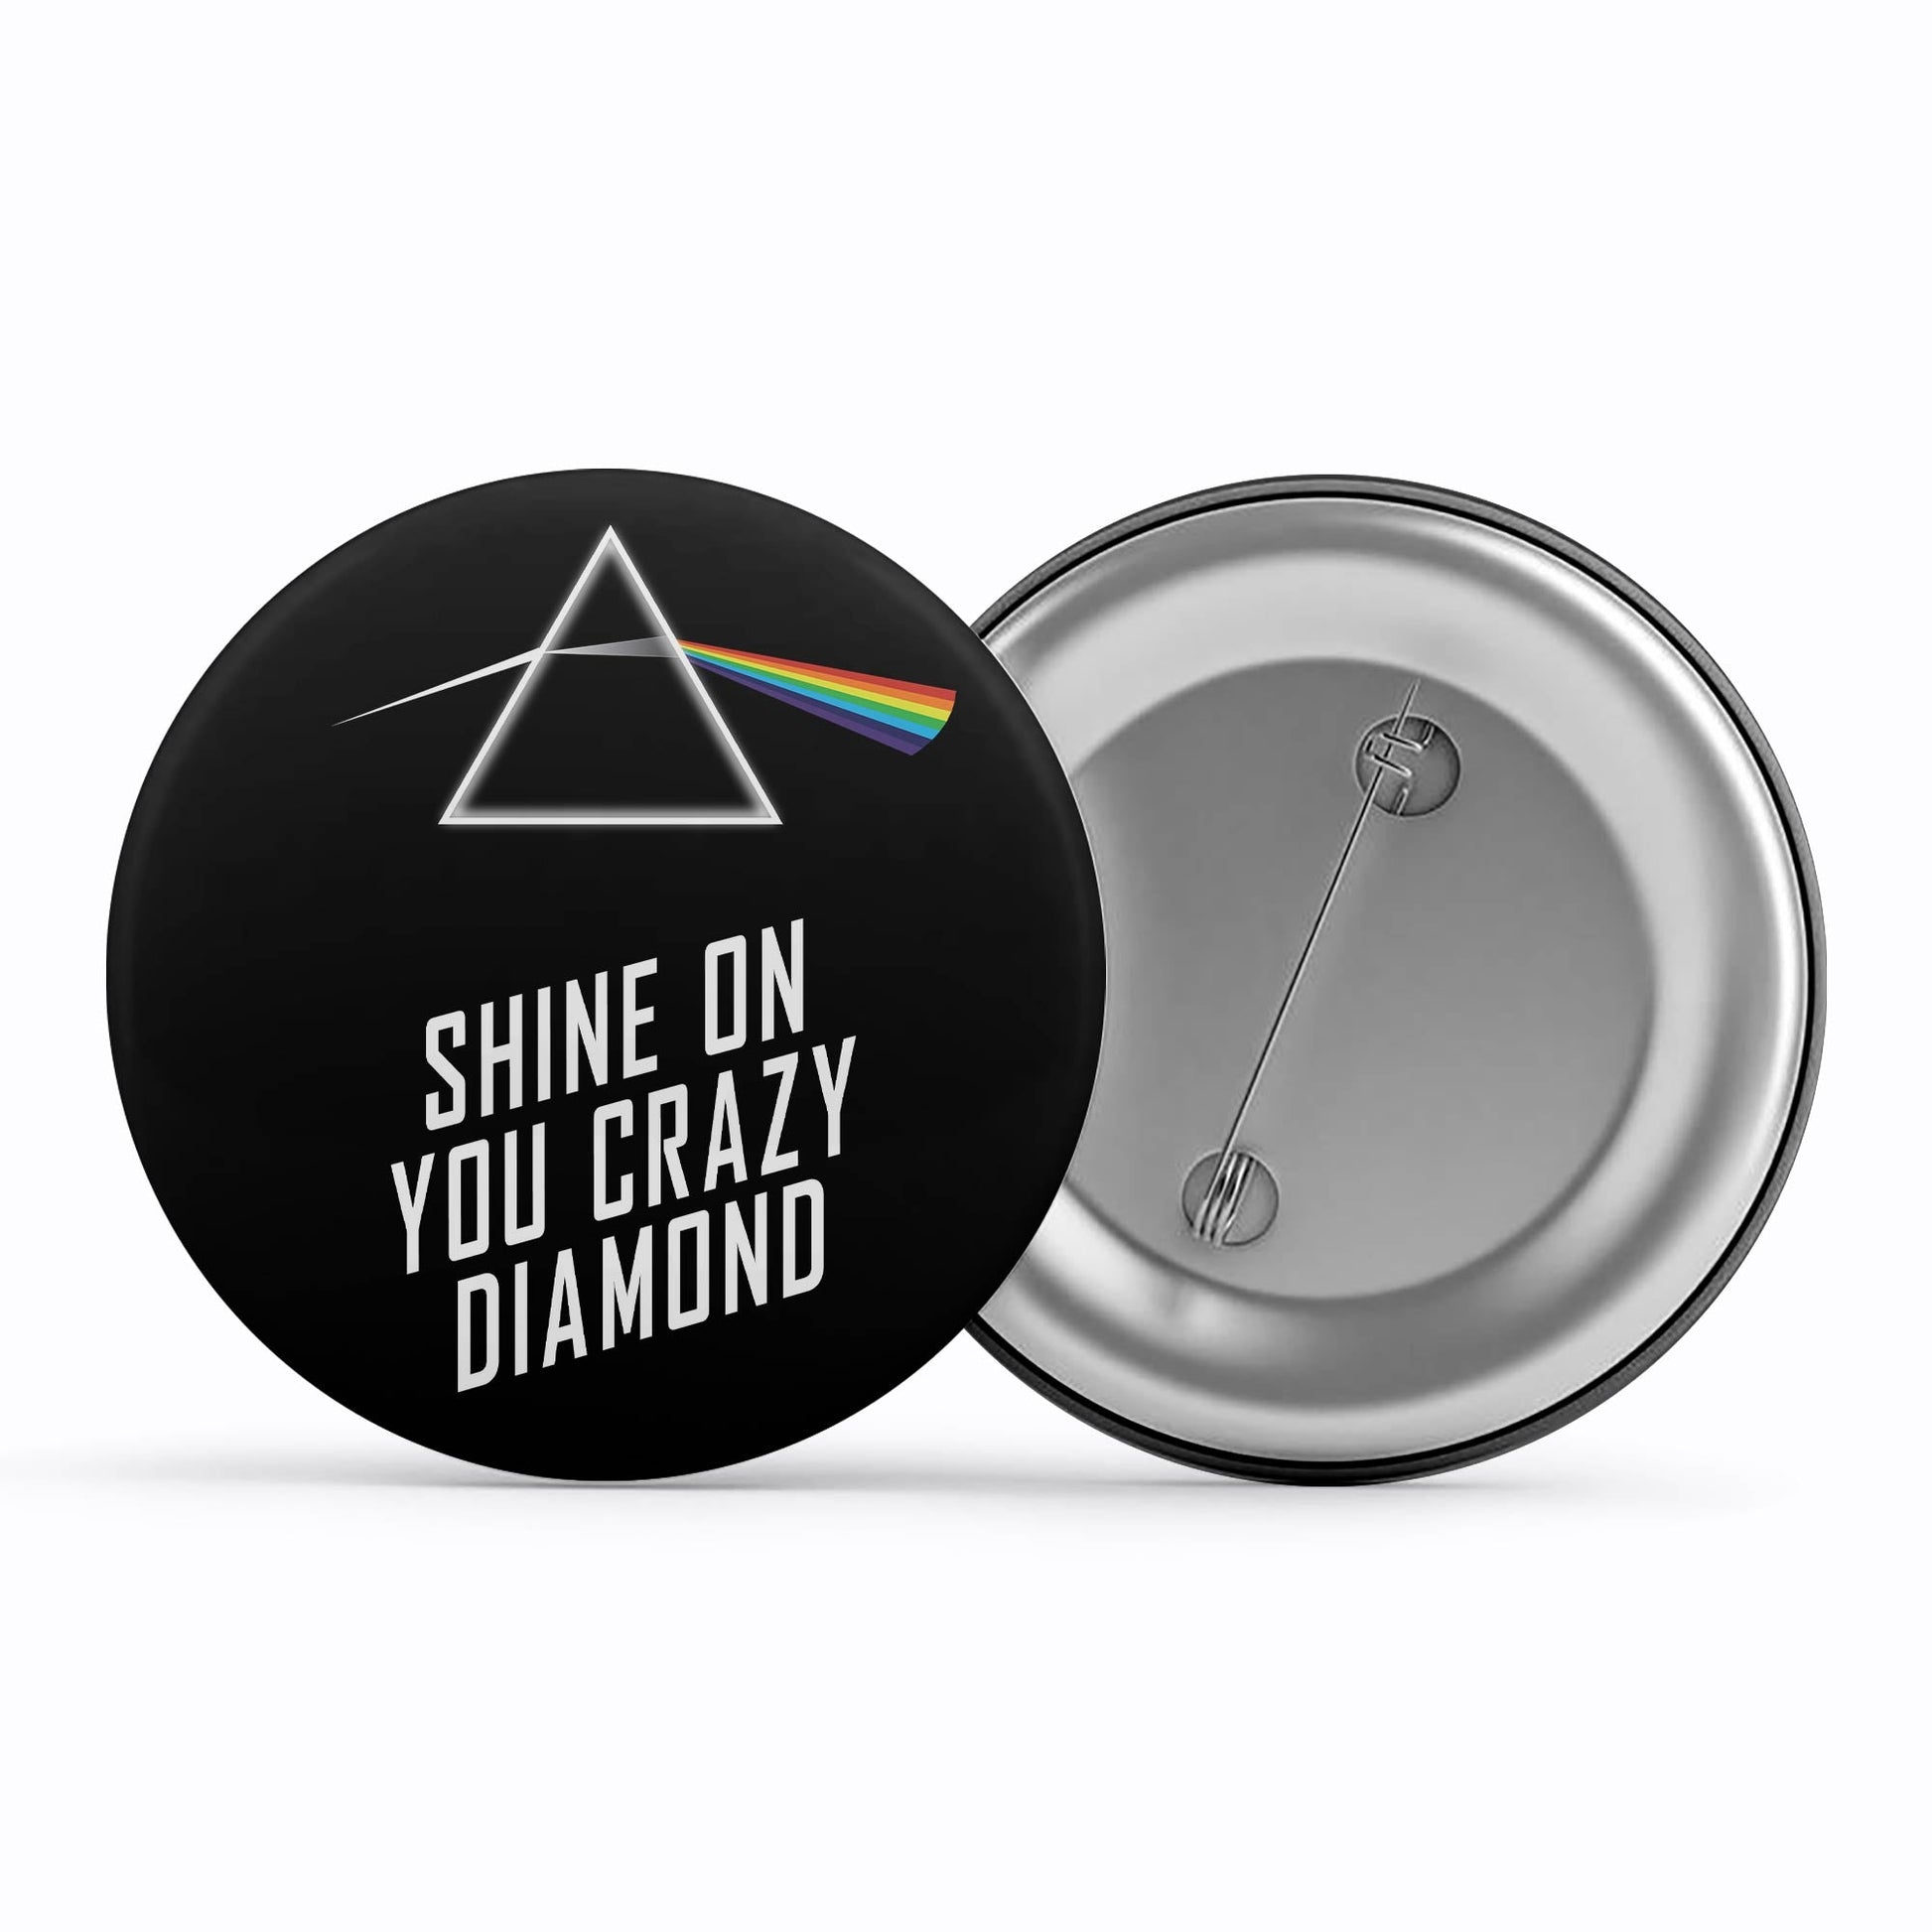 Shine On You Crazy Diamond Pink Floyd Badge Metal Pin Button Brooch The Banyan Tee TBT